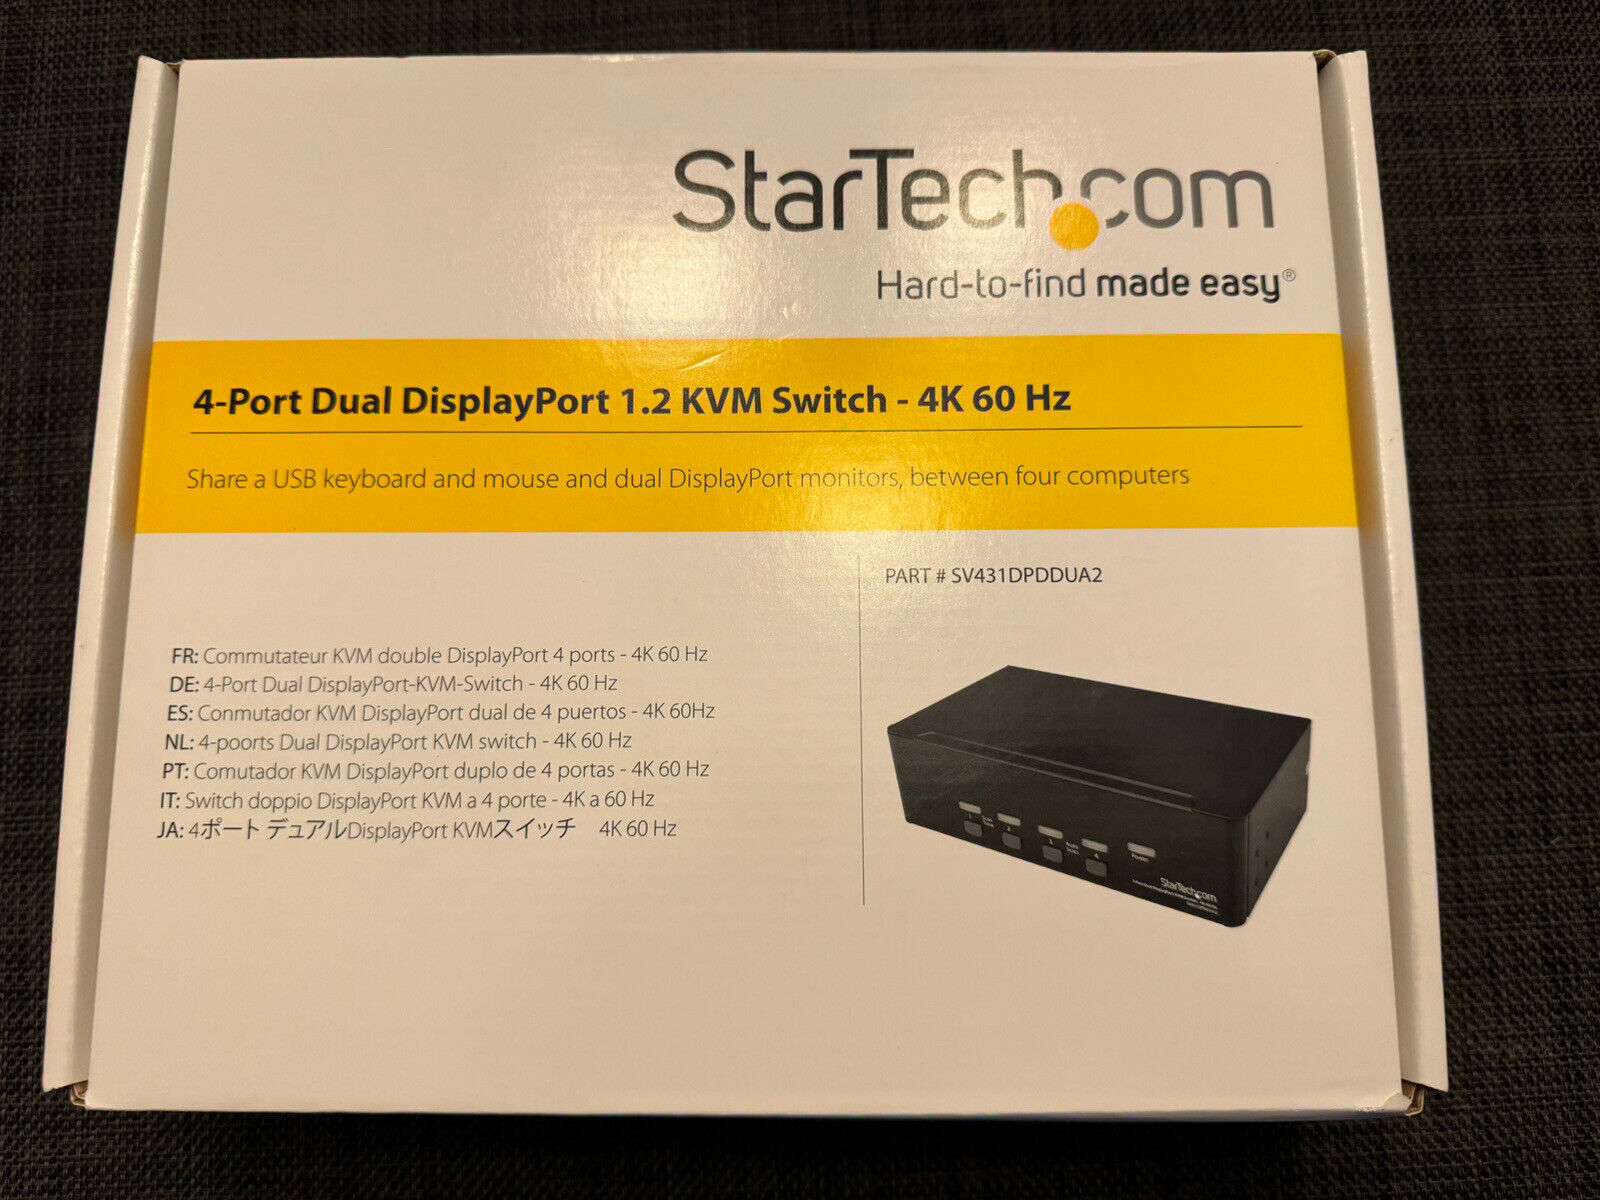 STARTECH.COM 4-PORT DUAL DISPLAYPORT KVM Switch 4K 60 Hz P# SV431DPDDUA2 NEW